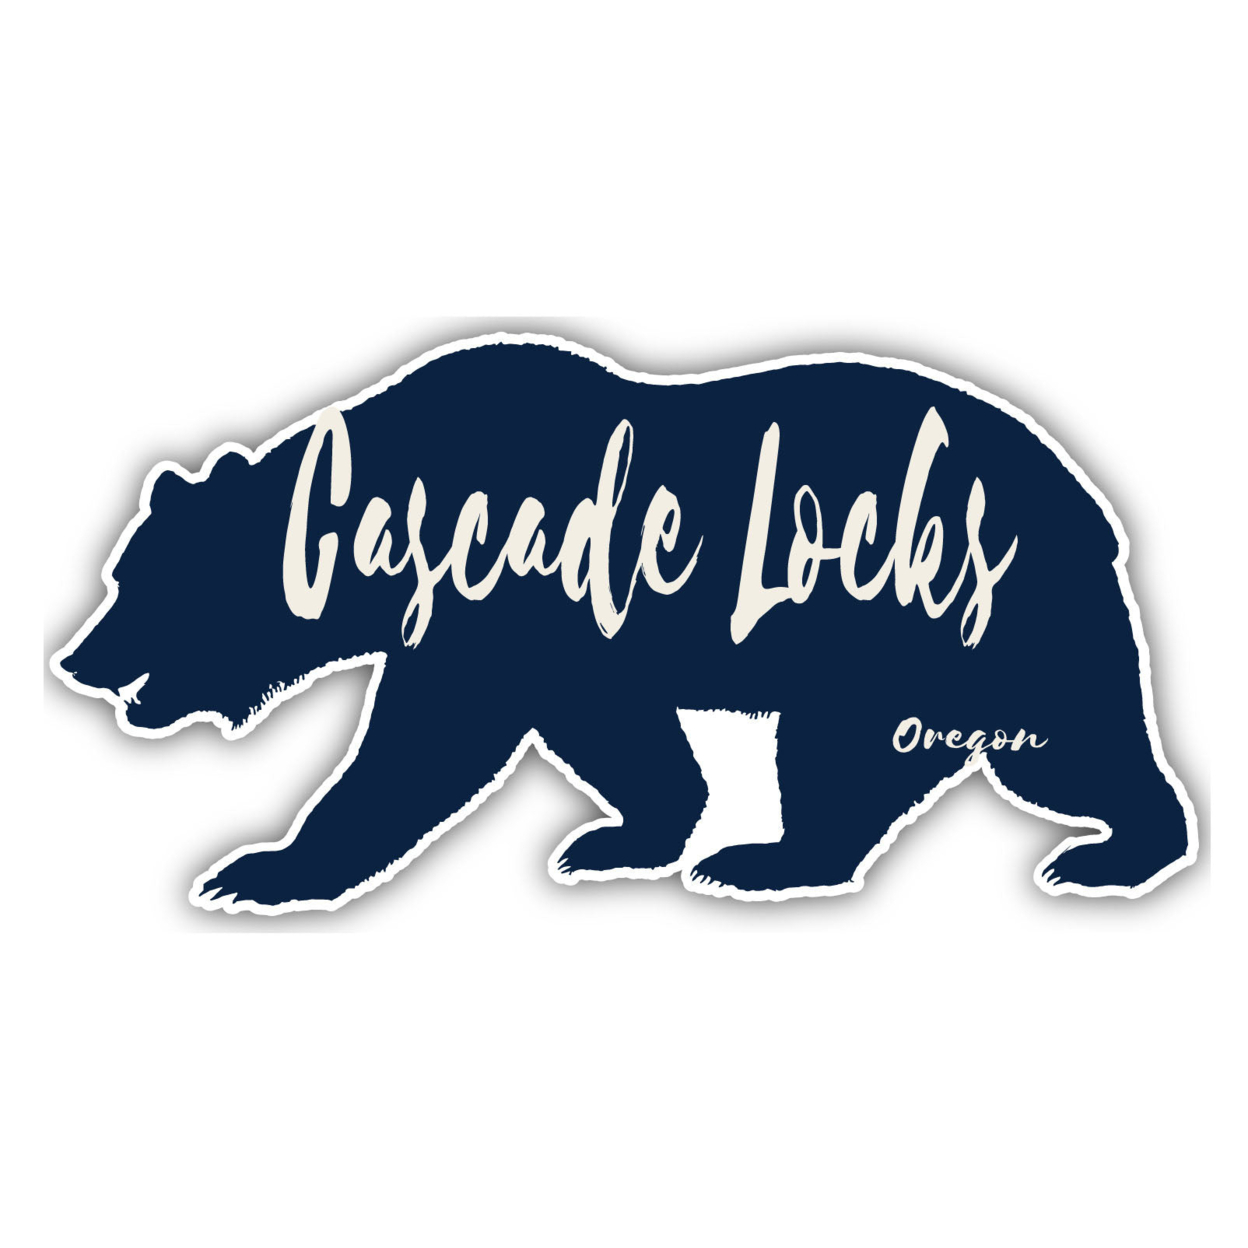 Cascade Locks Oregon Souvenir Decorative Stickers (Choose Theme And Size) - Single Unit, 12-Inch, Bear